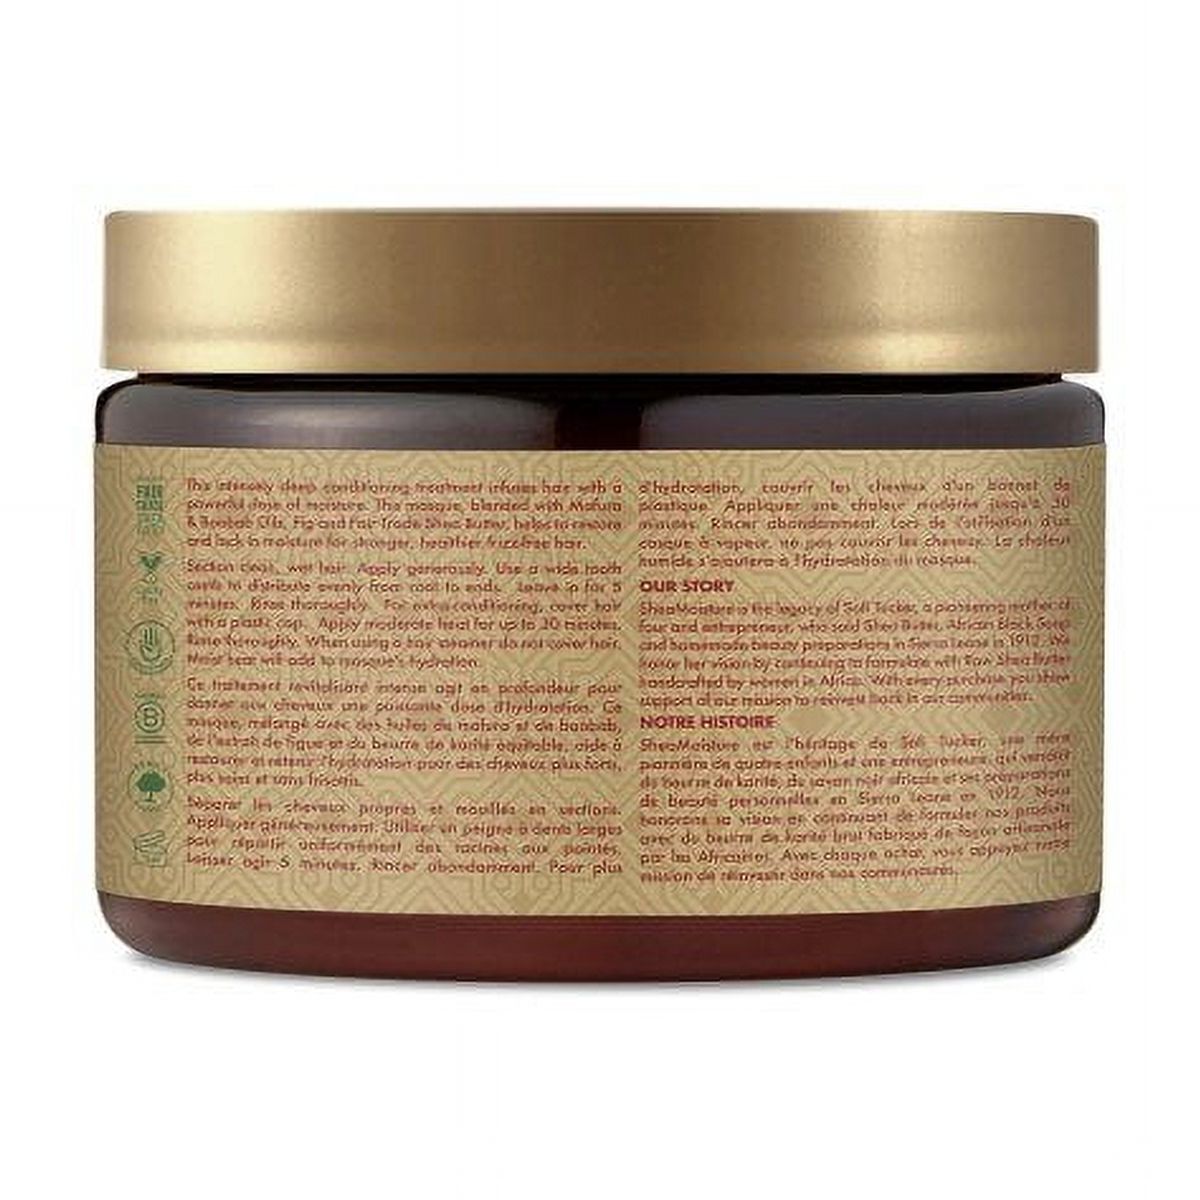 SheaMoisture Intensive Hydration Hair Mask Frizz Control with Manuka Honey and Mafura Oil, 12 fl oz - image 3 of 4